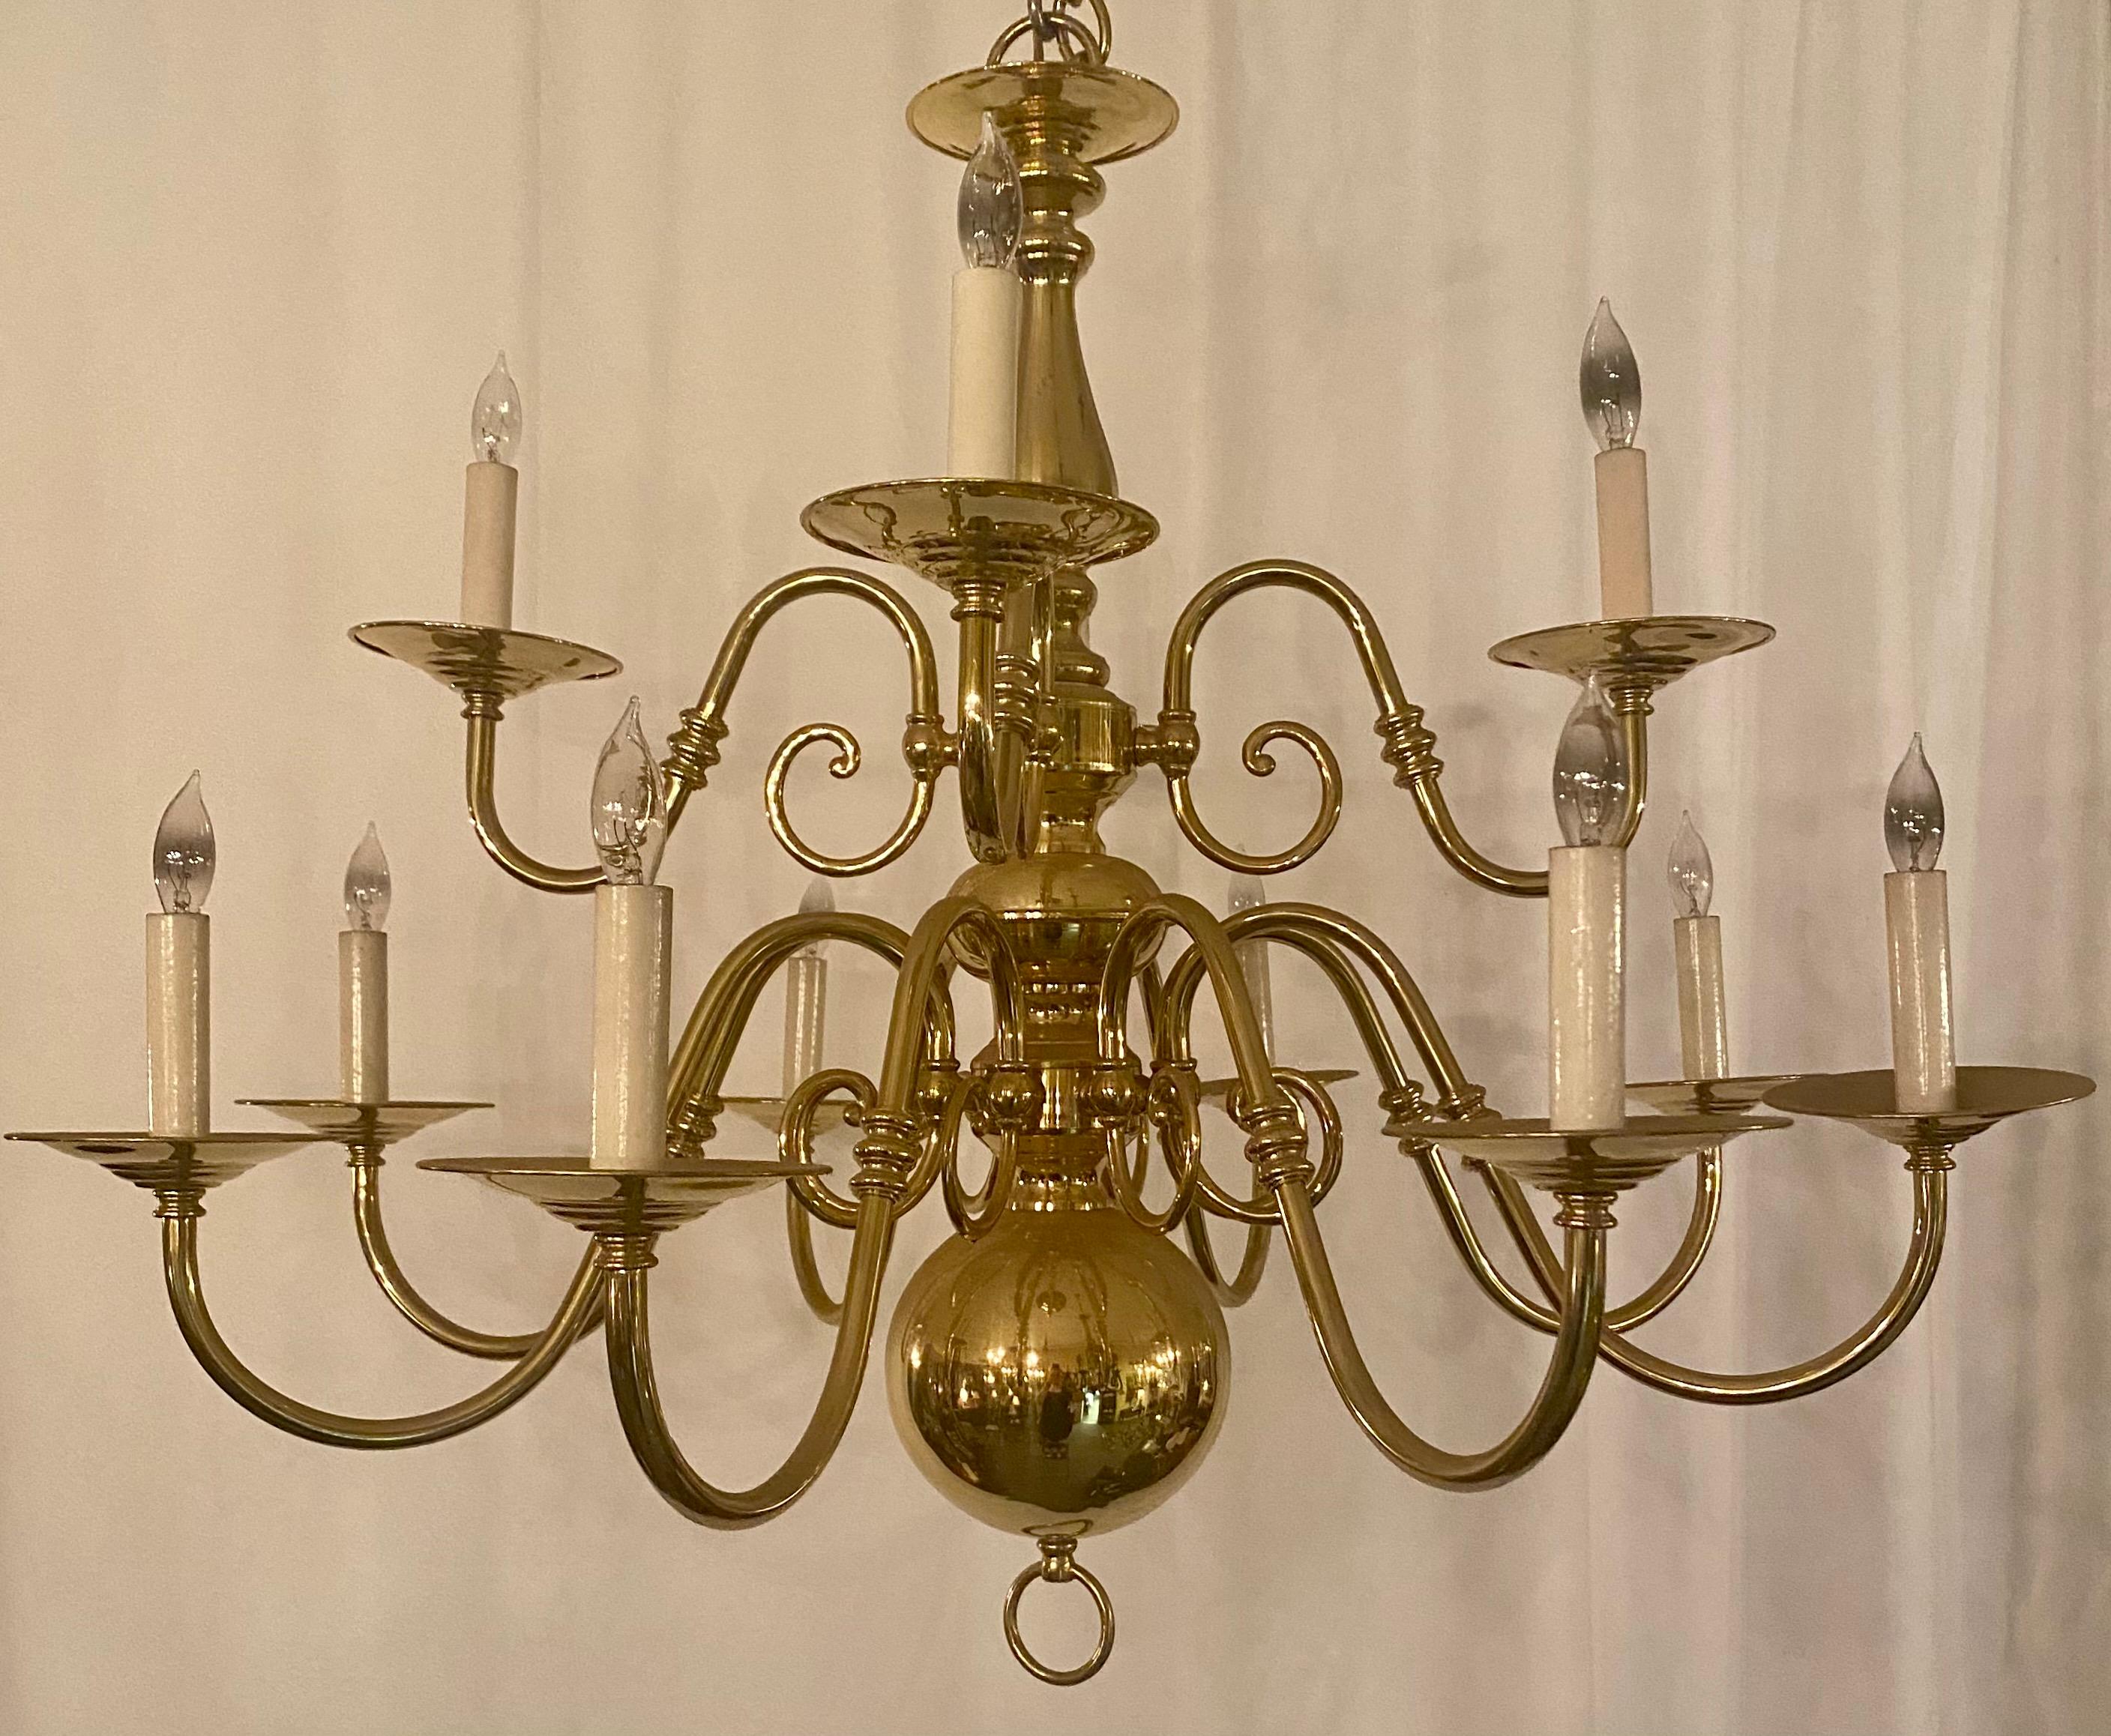 Estate Williamsburg style bronze chandelier with 8 lights.
CHB105.